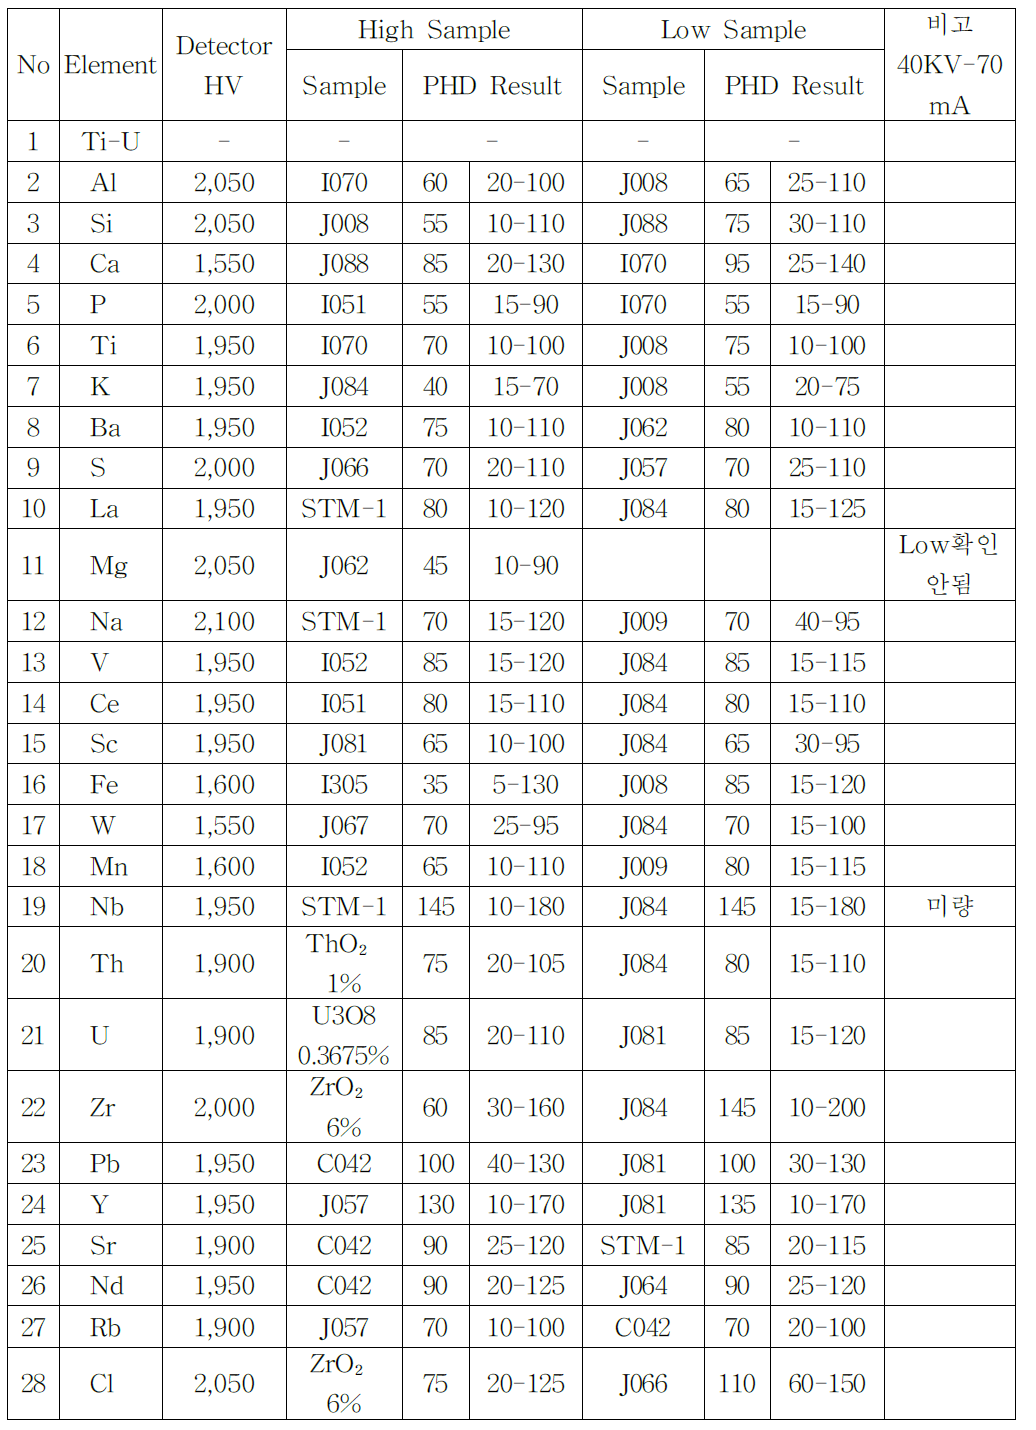 MXF-2400의 전 원소별 PHD 점검결과표